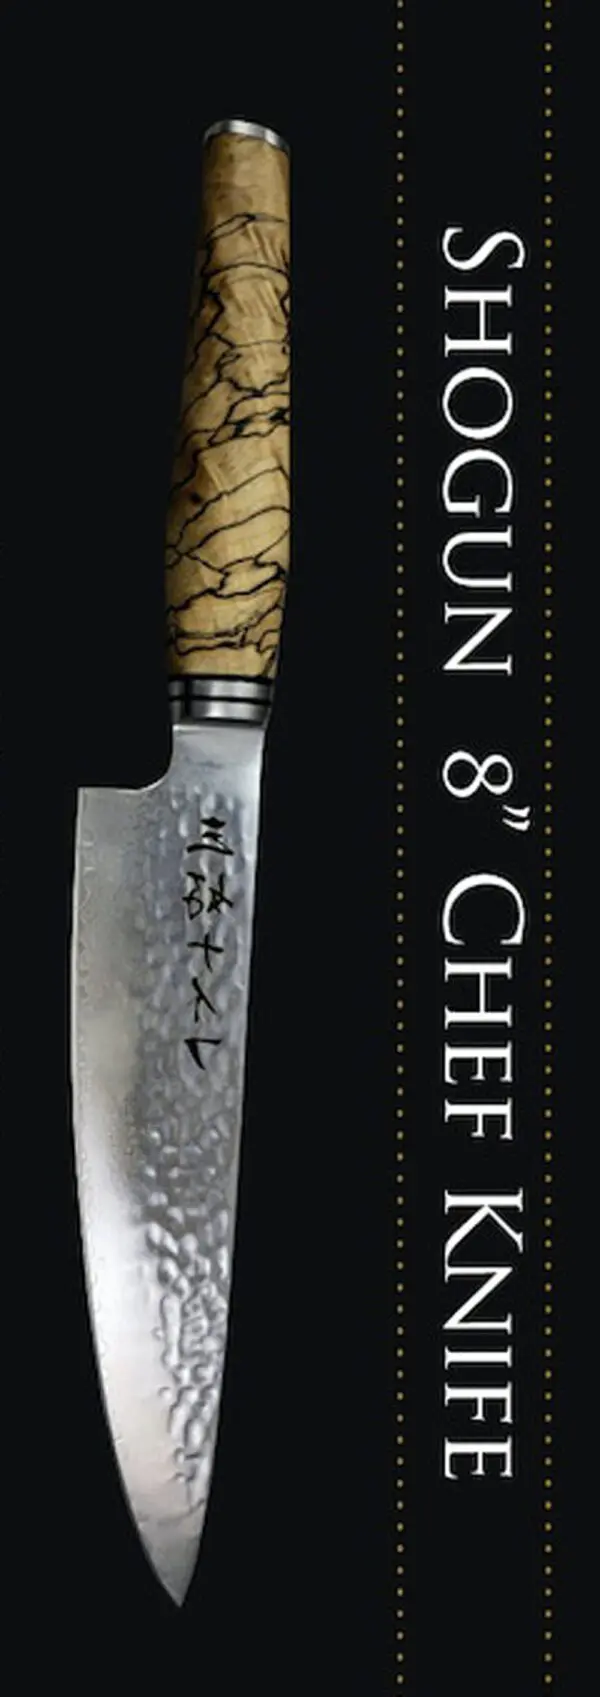 shogun - Chef